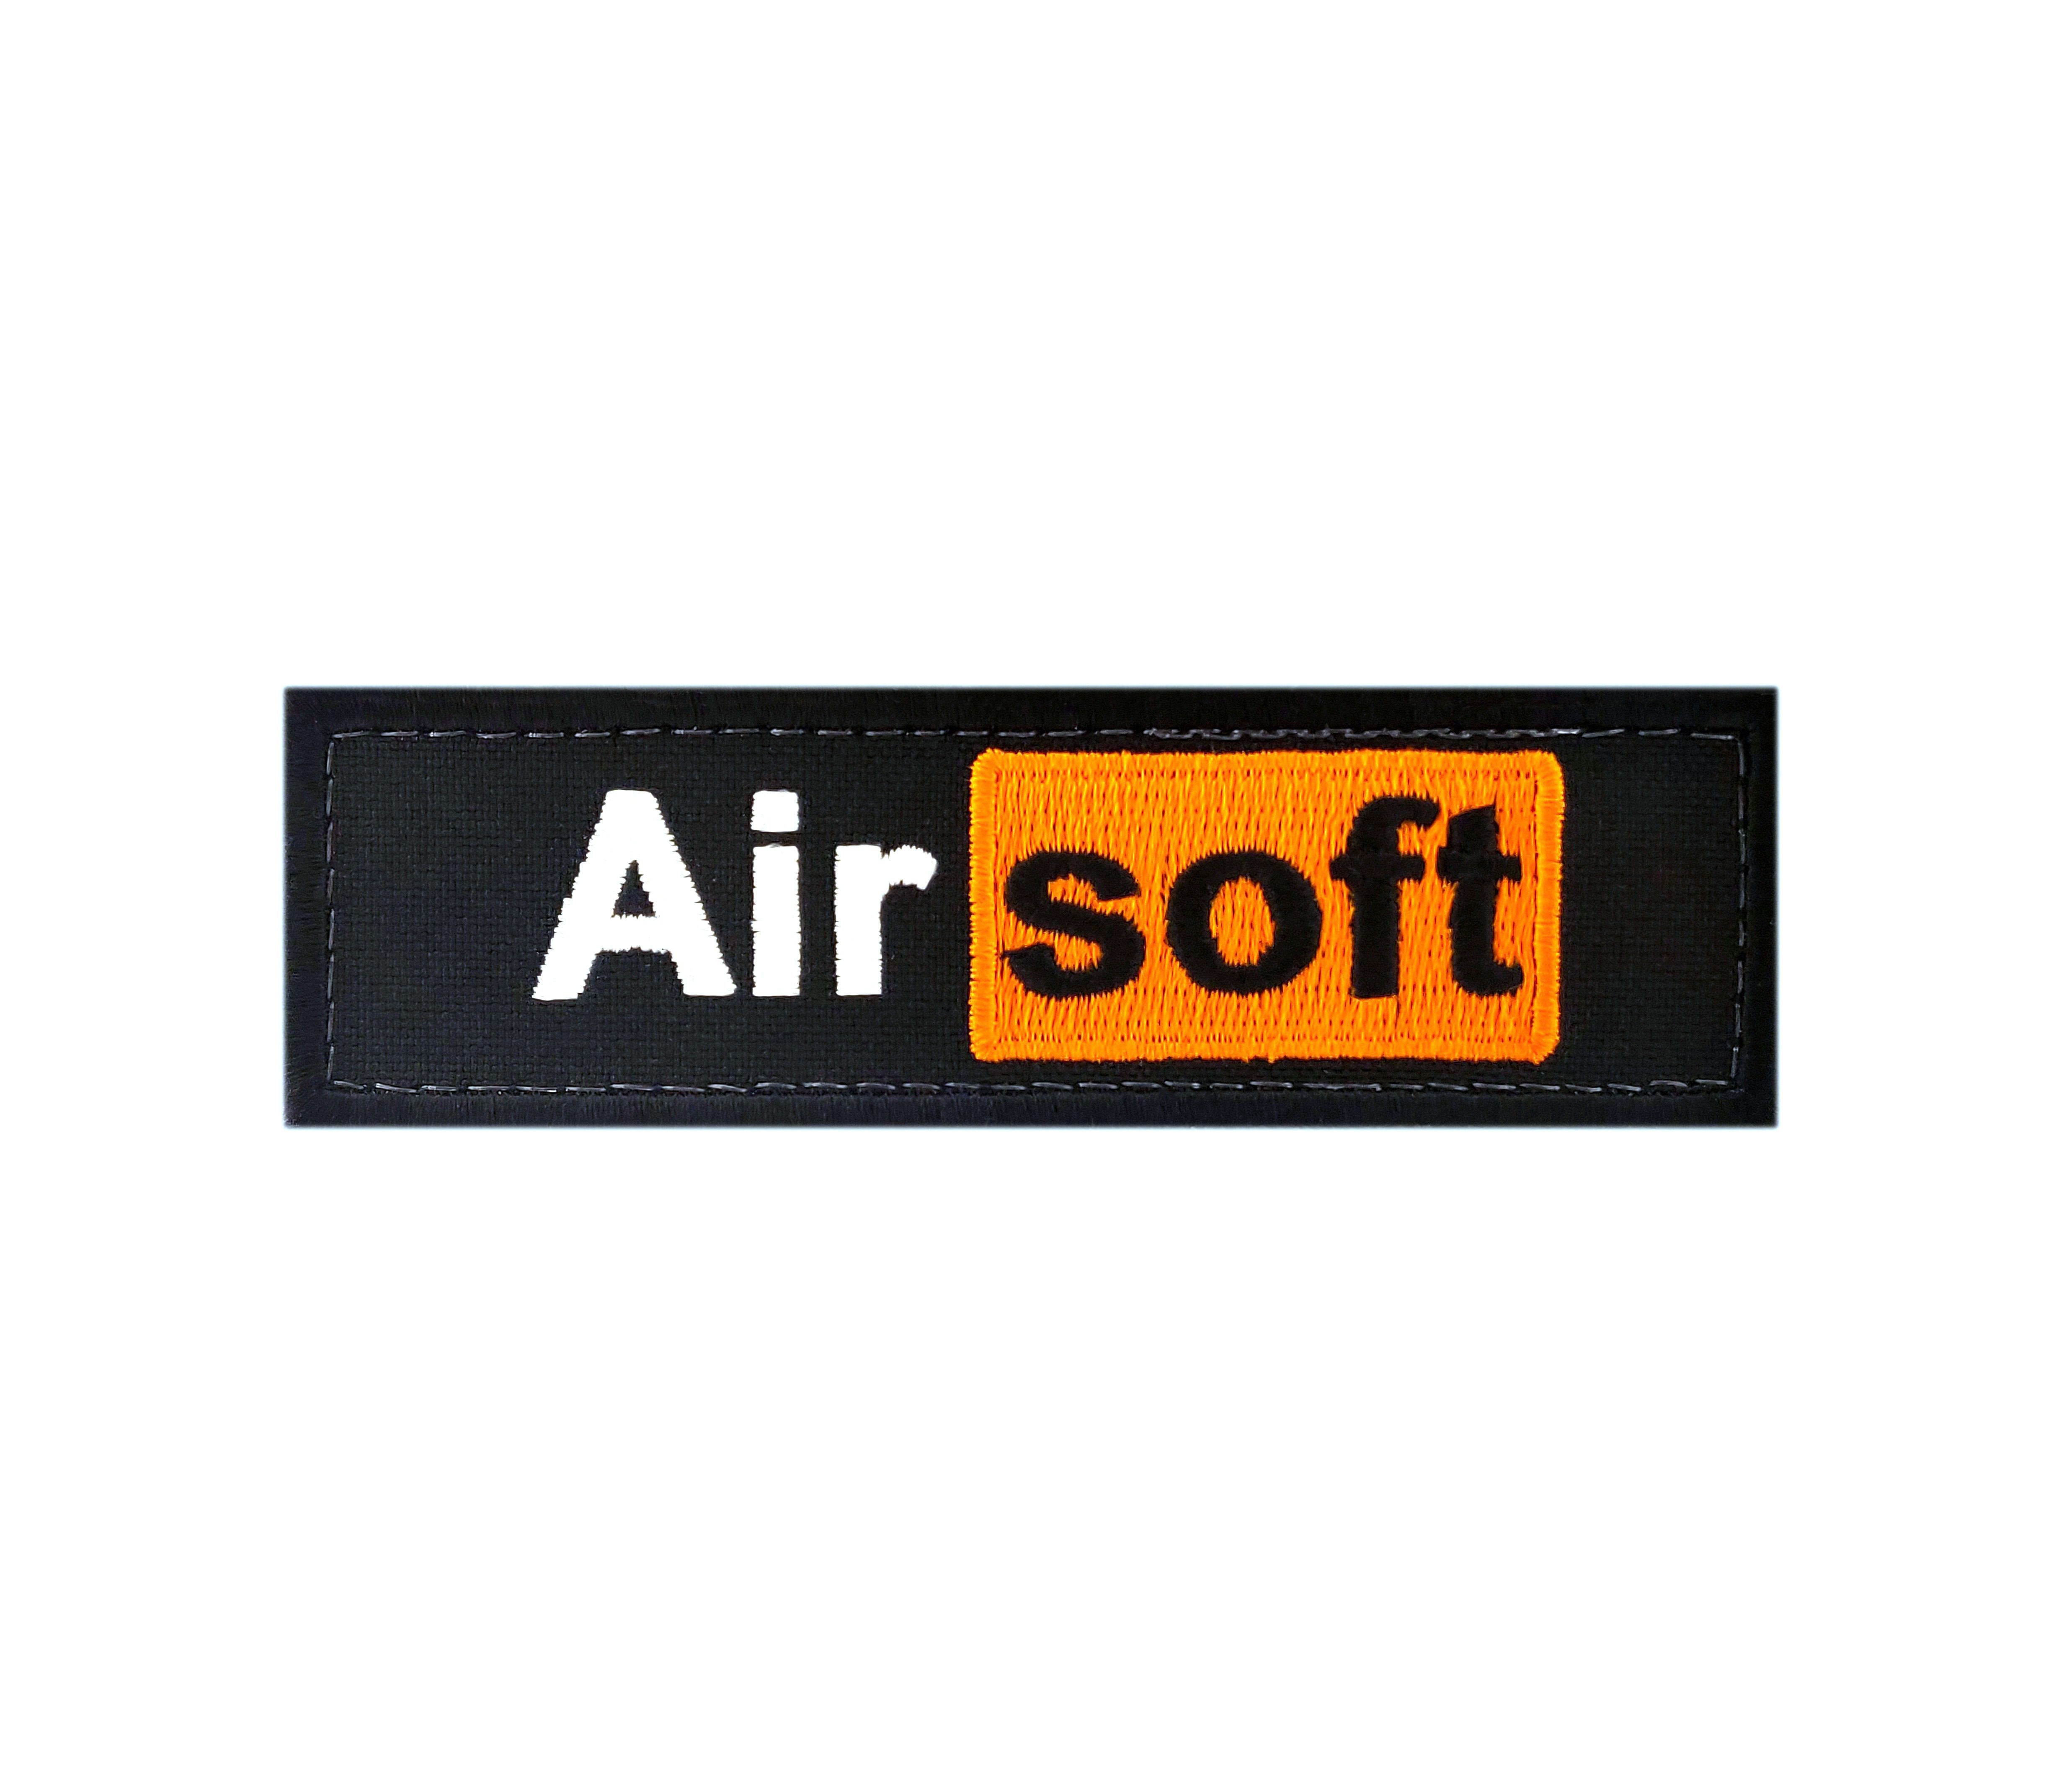 I Play Airsoft beige Softair Sniper PVC Patch Logo Klett inkl gegenseite 